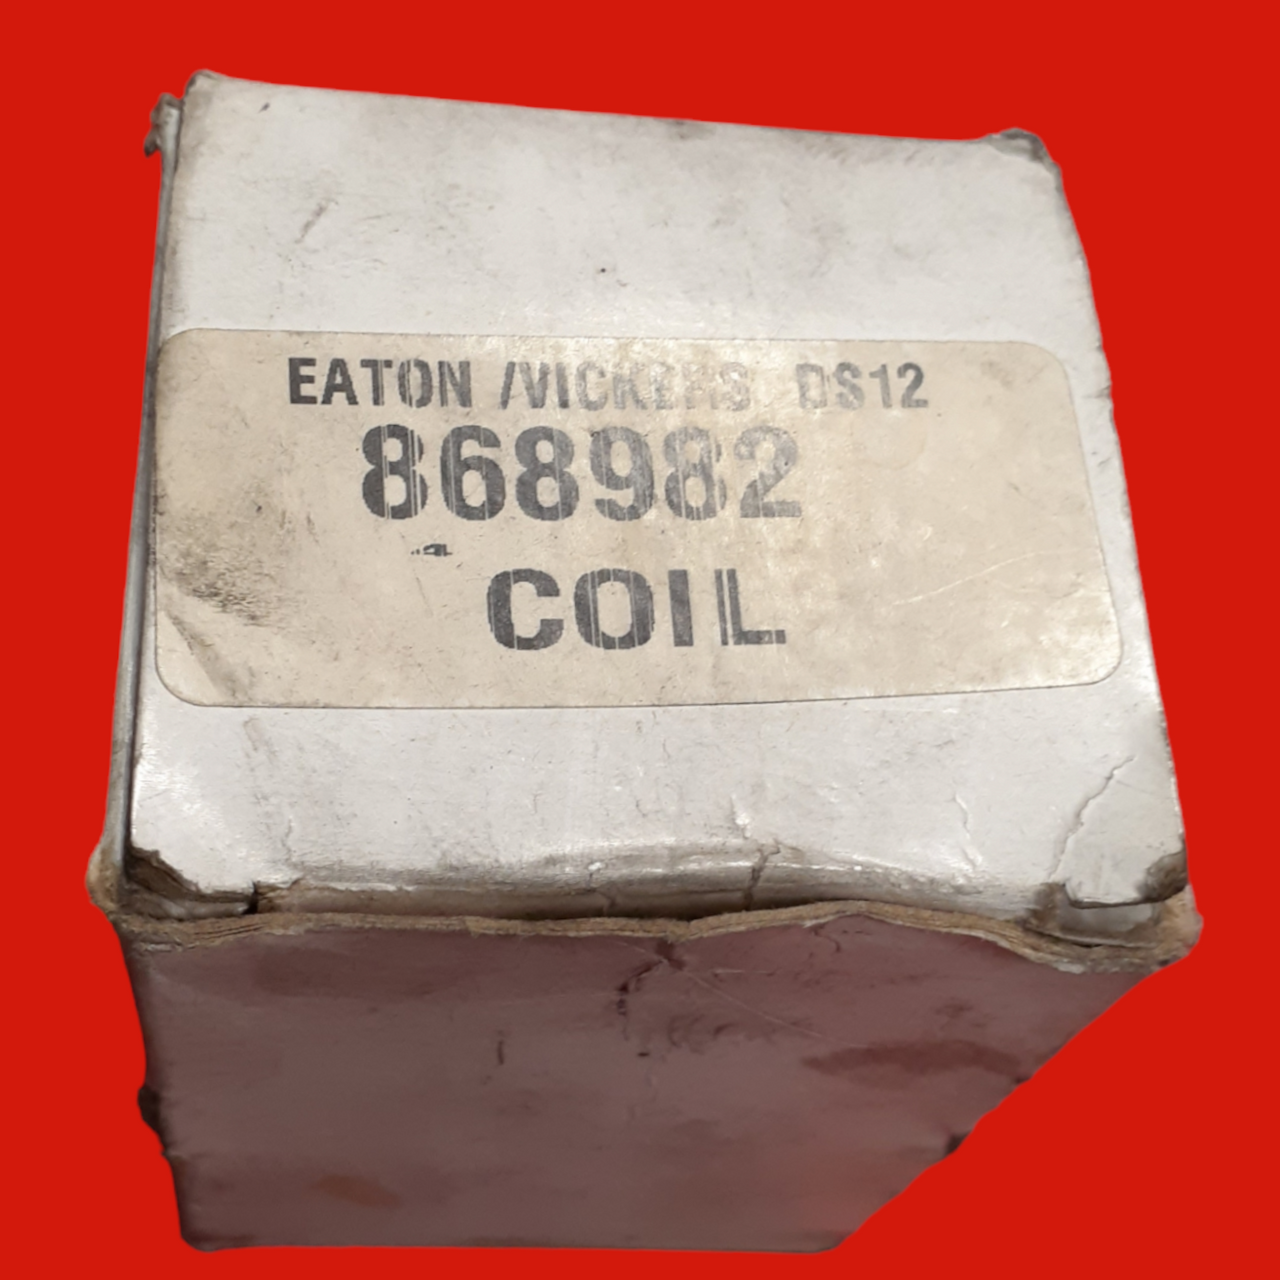 Eaton/Vickers 868982 Coil